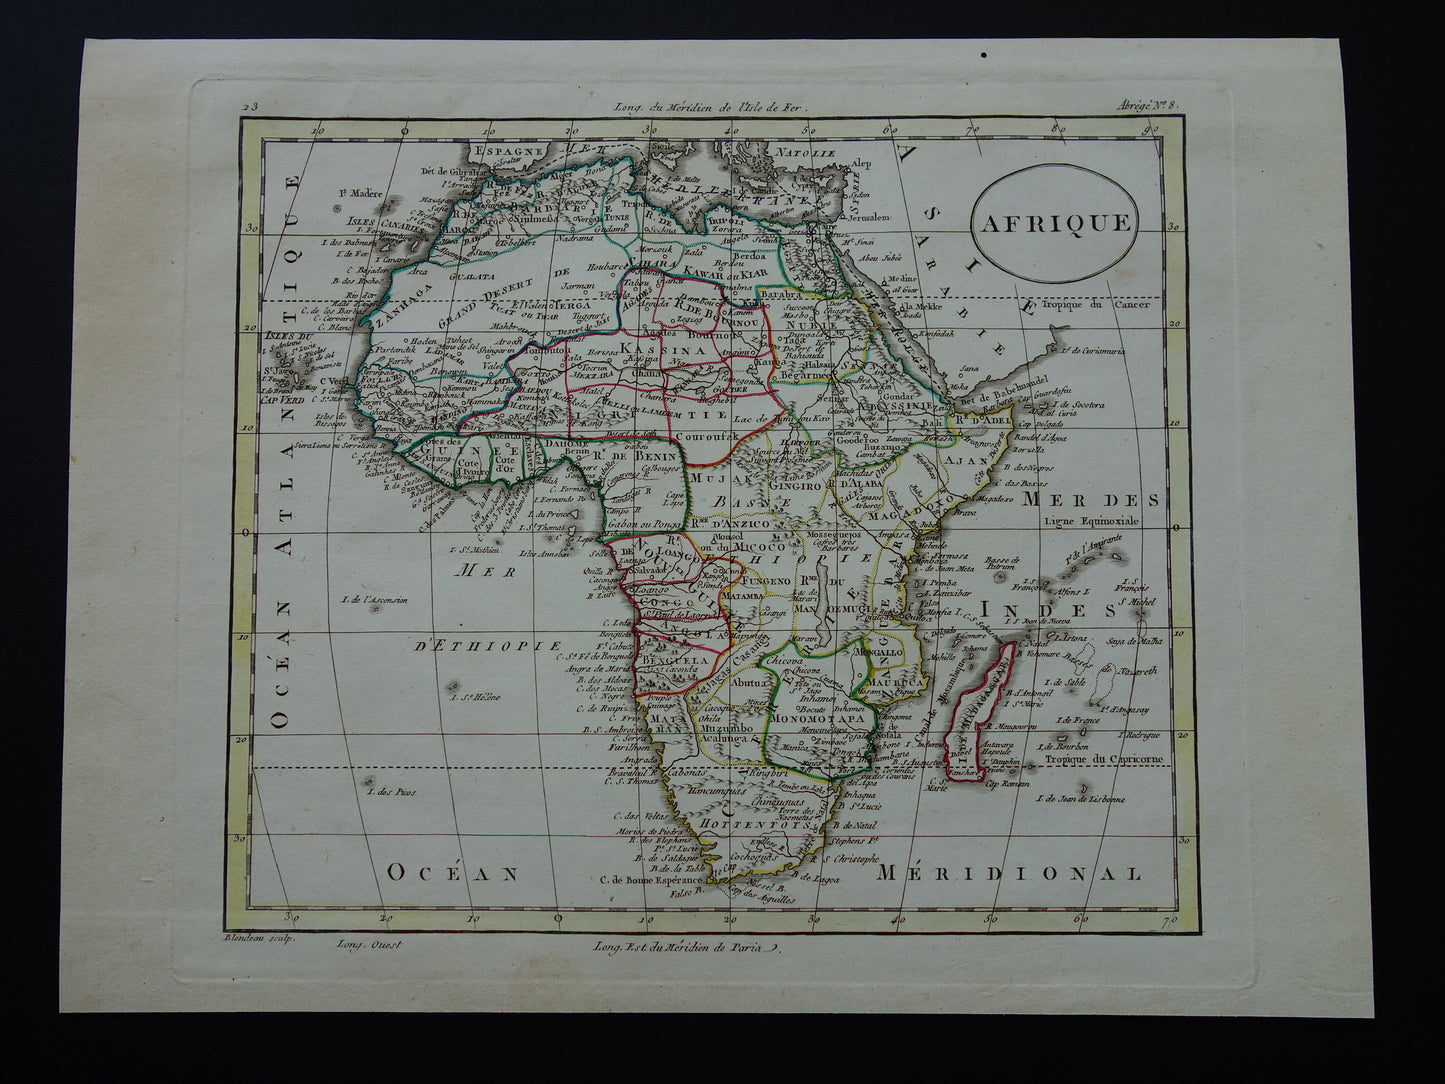 AFRIKA oude kaart van Afrikaans continent 1802 originele antieke Franse handgekleurde landkaart poster